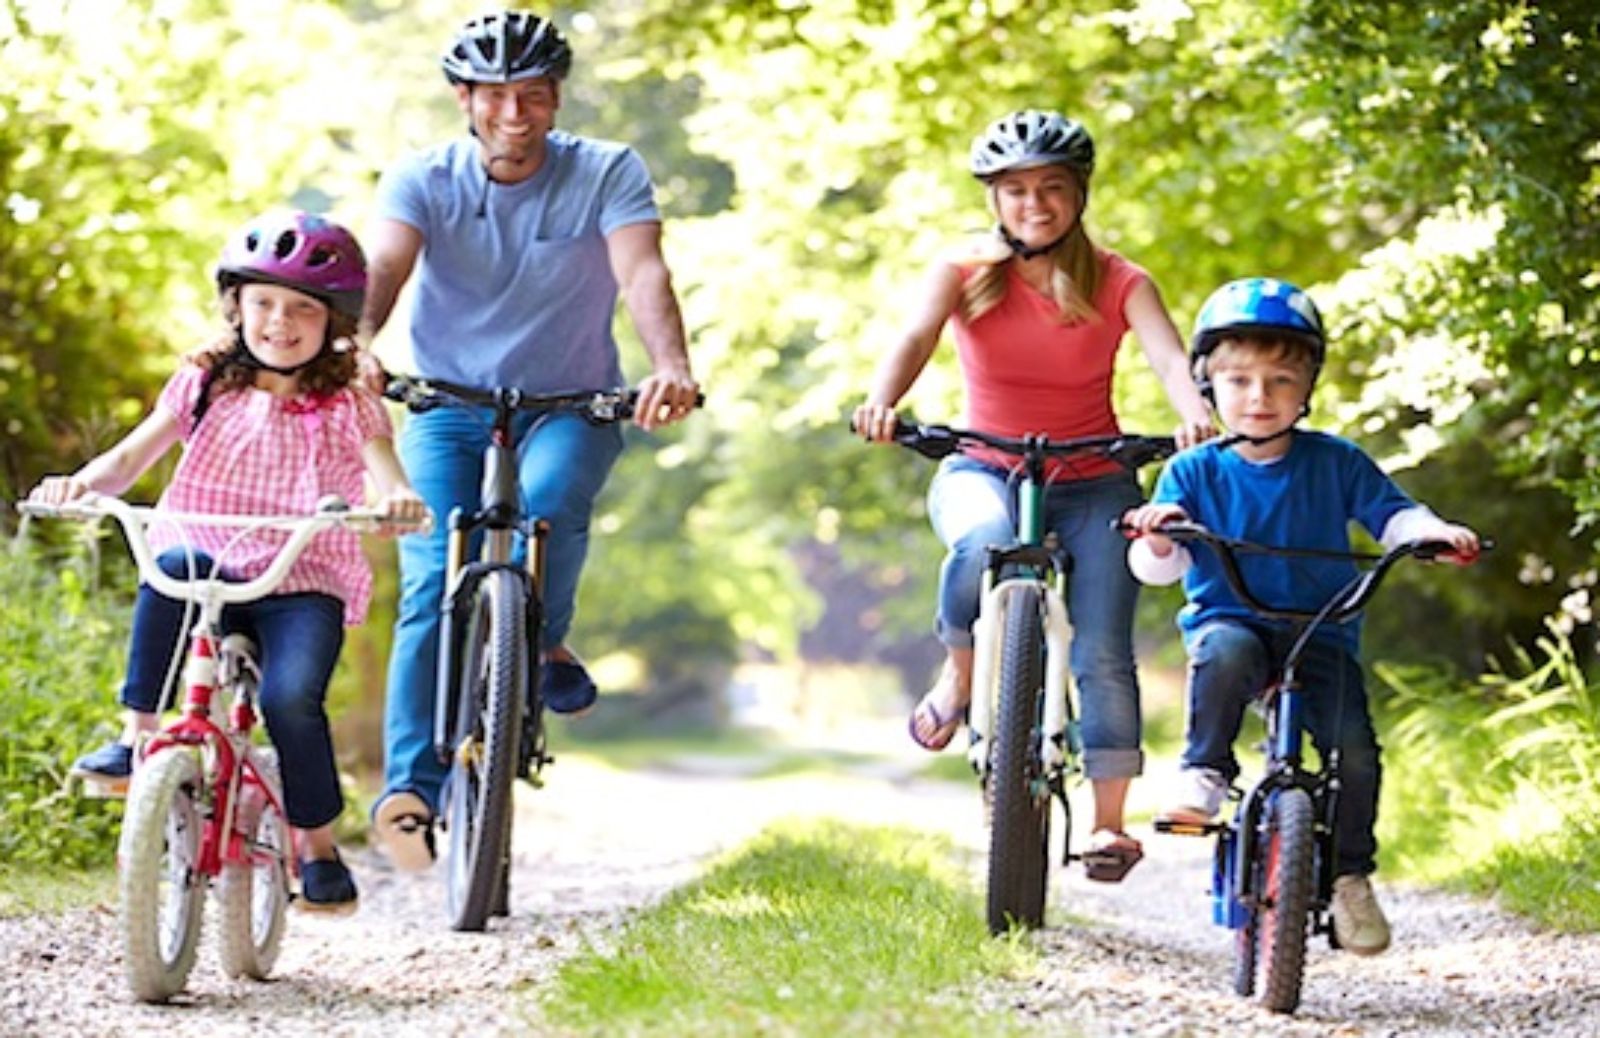 Vacanze in bici per famiglie sulle ciclabili